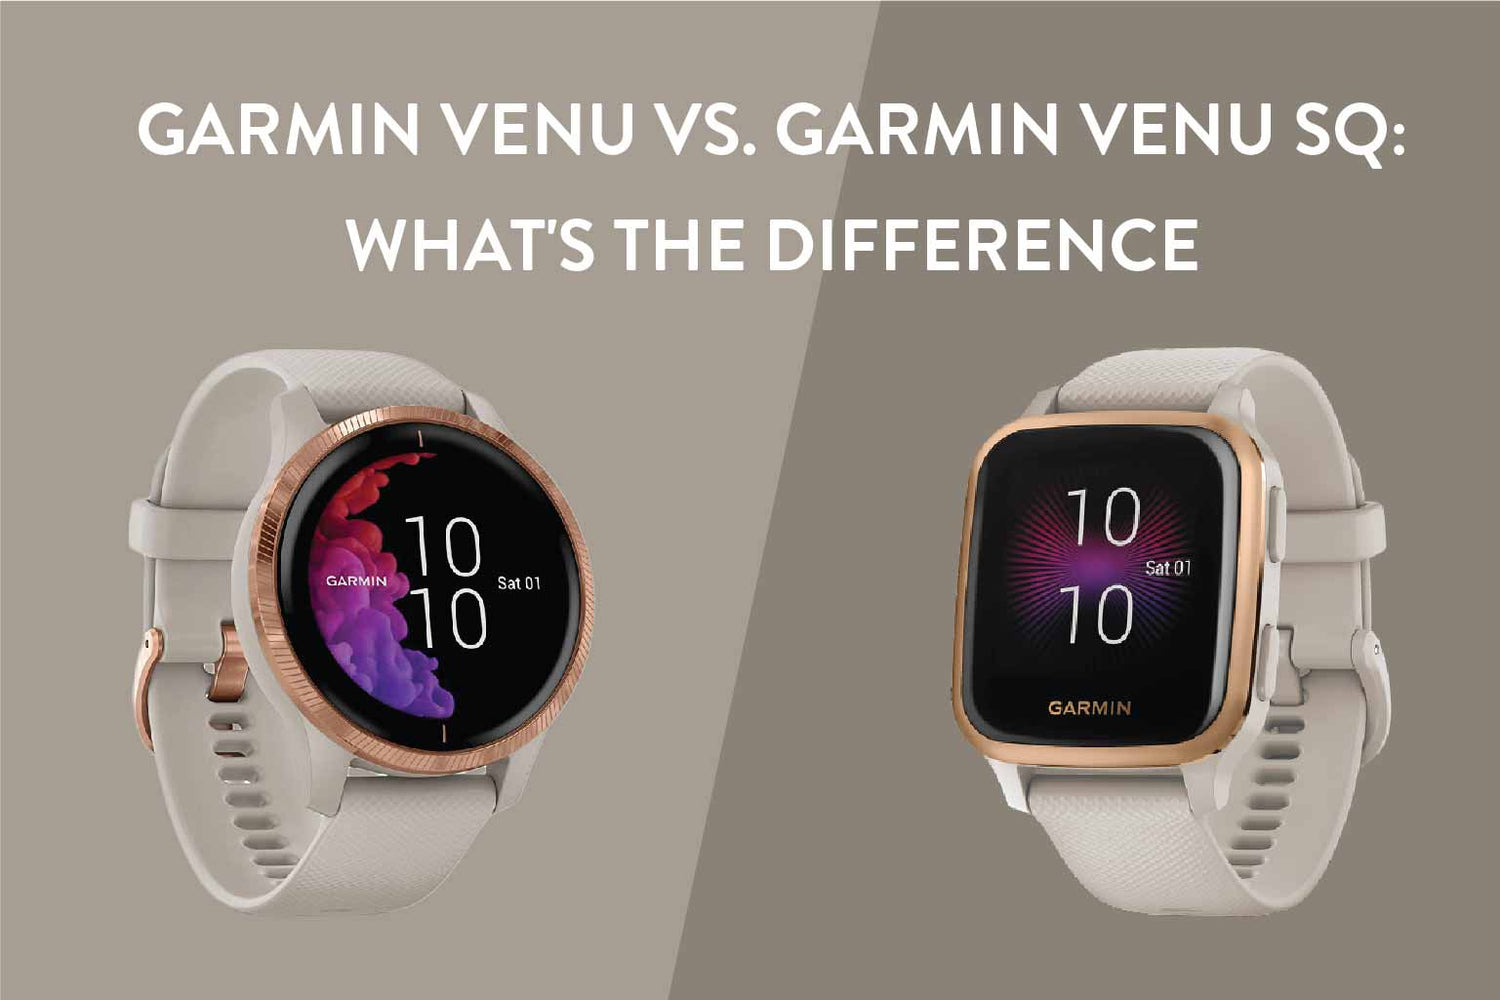 Garmin Venu vs. Garmin Venu Sq: What's The Difference